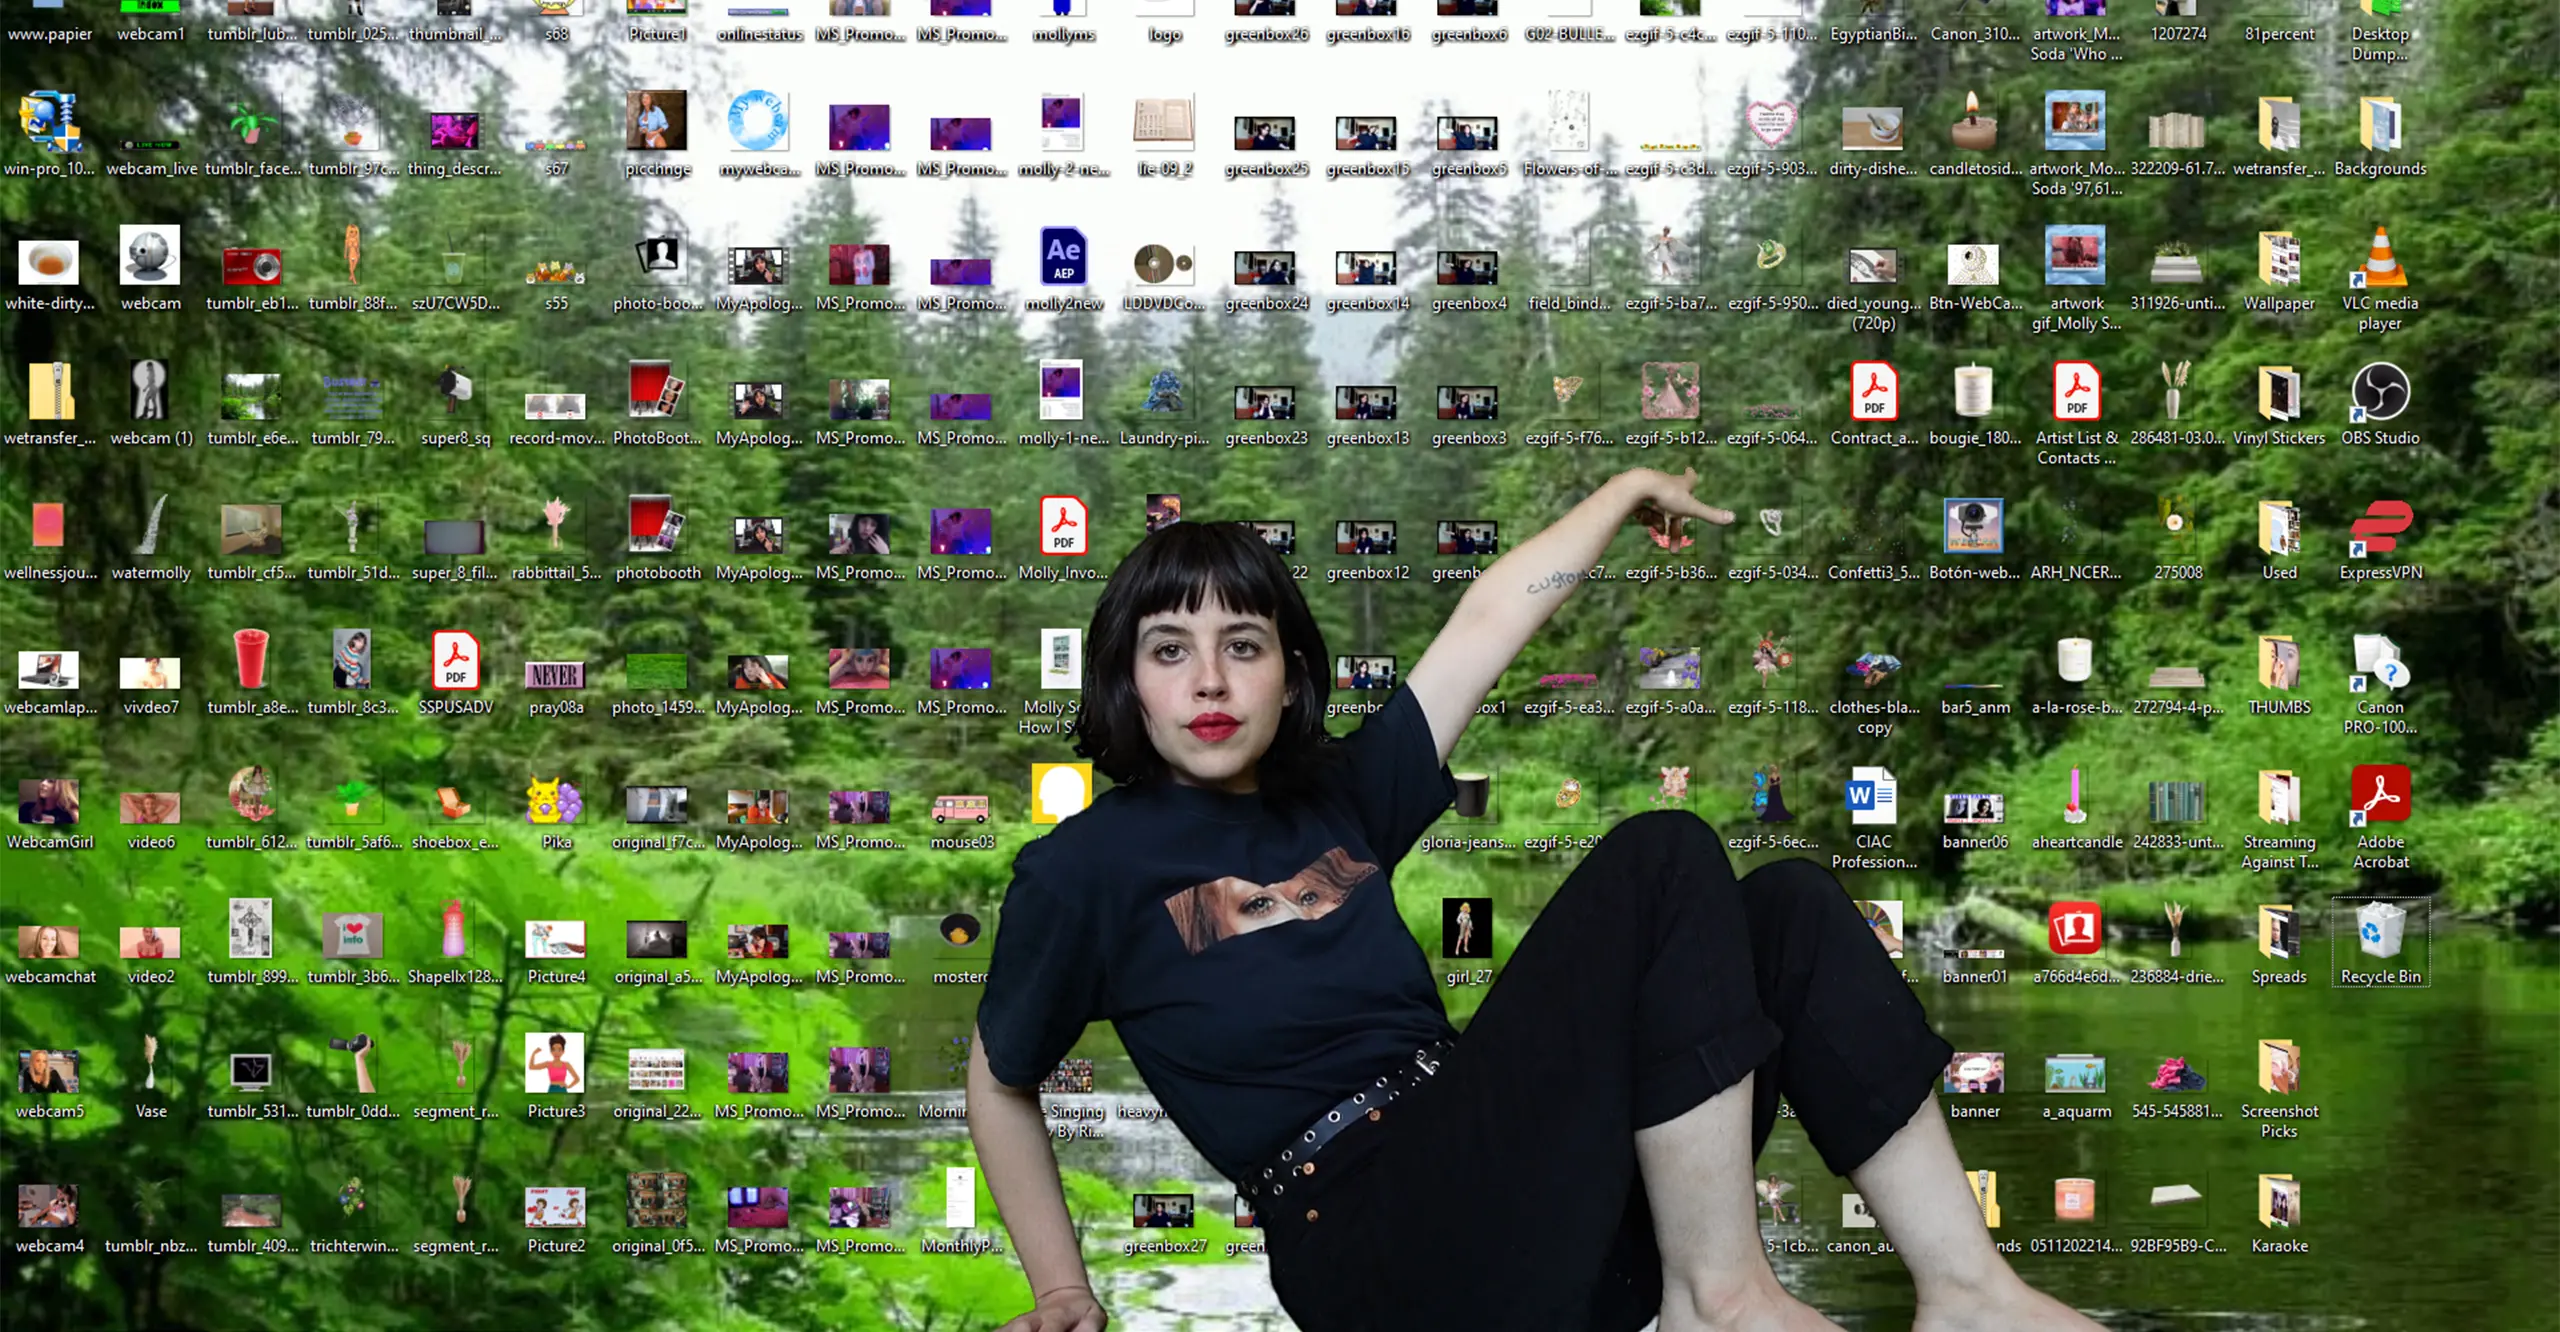 A woman facing the camera shows a screenshot of a computer desktop full of files